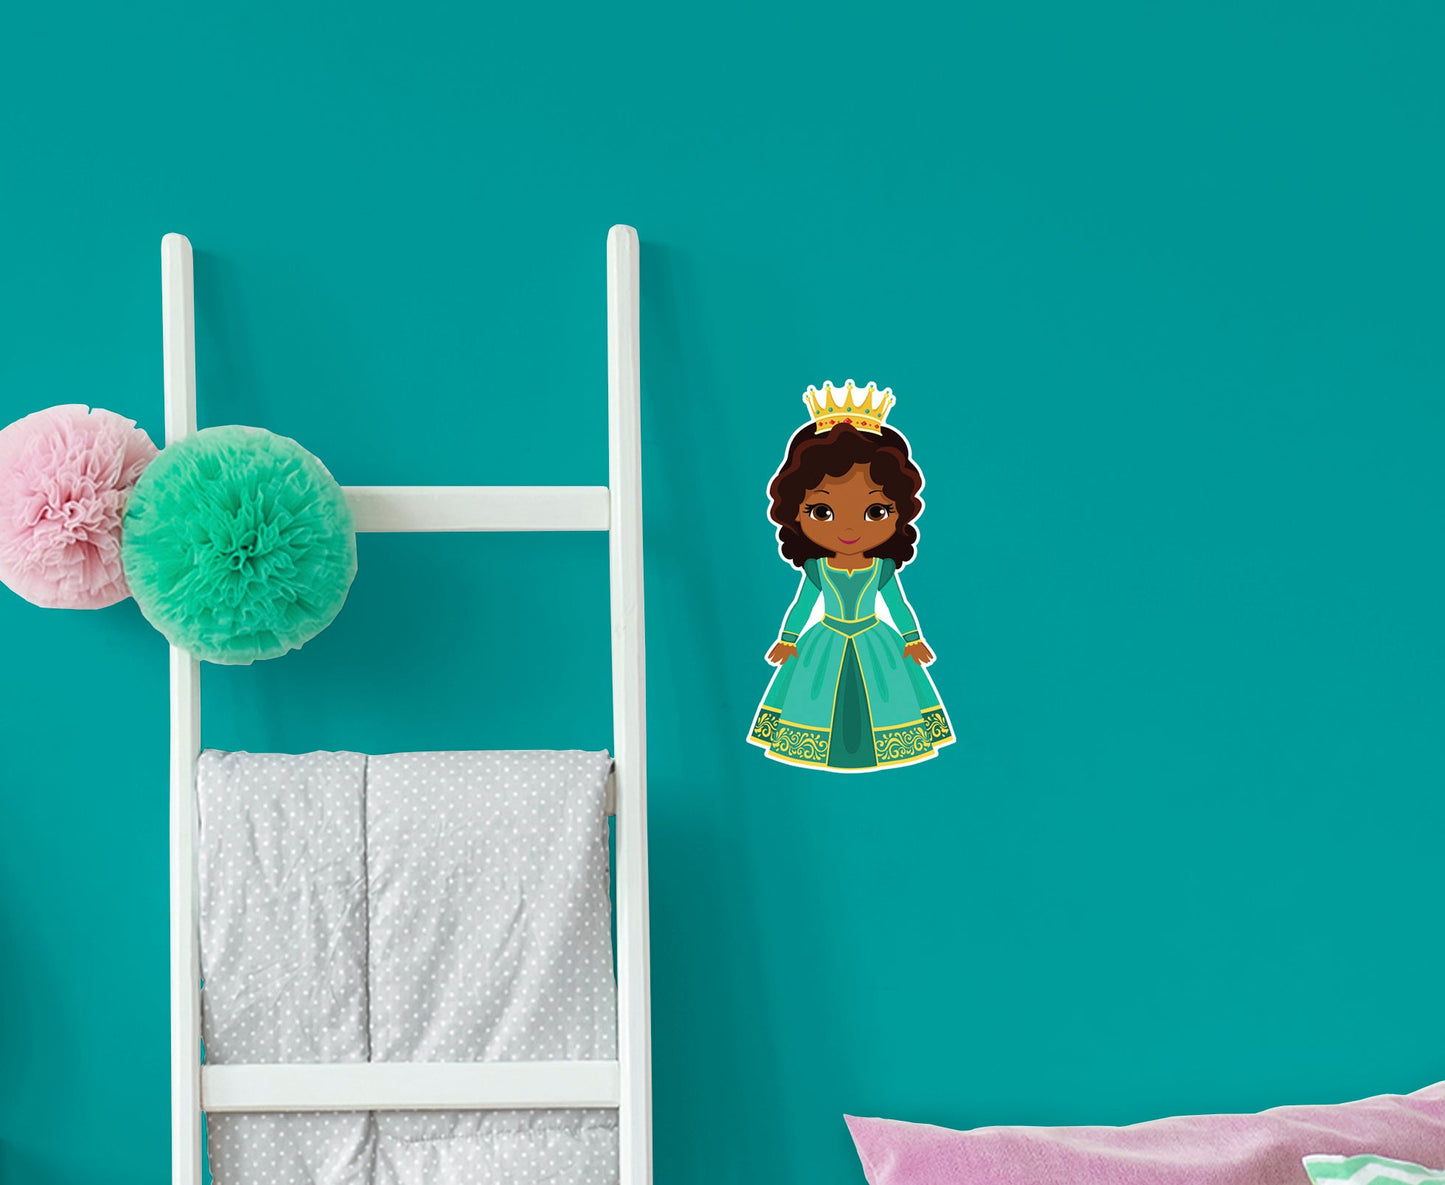 Nursery: Princess Crown Character        -   Removable Wall   Adhesive Decal